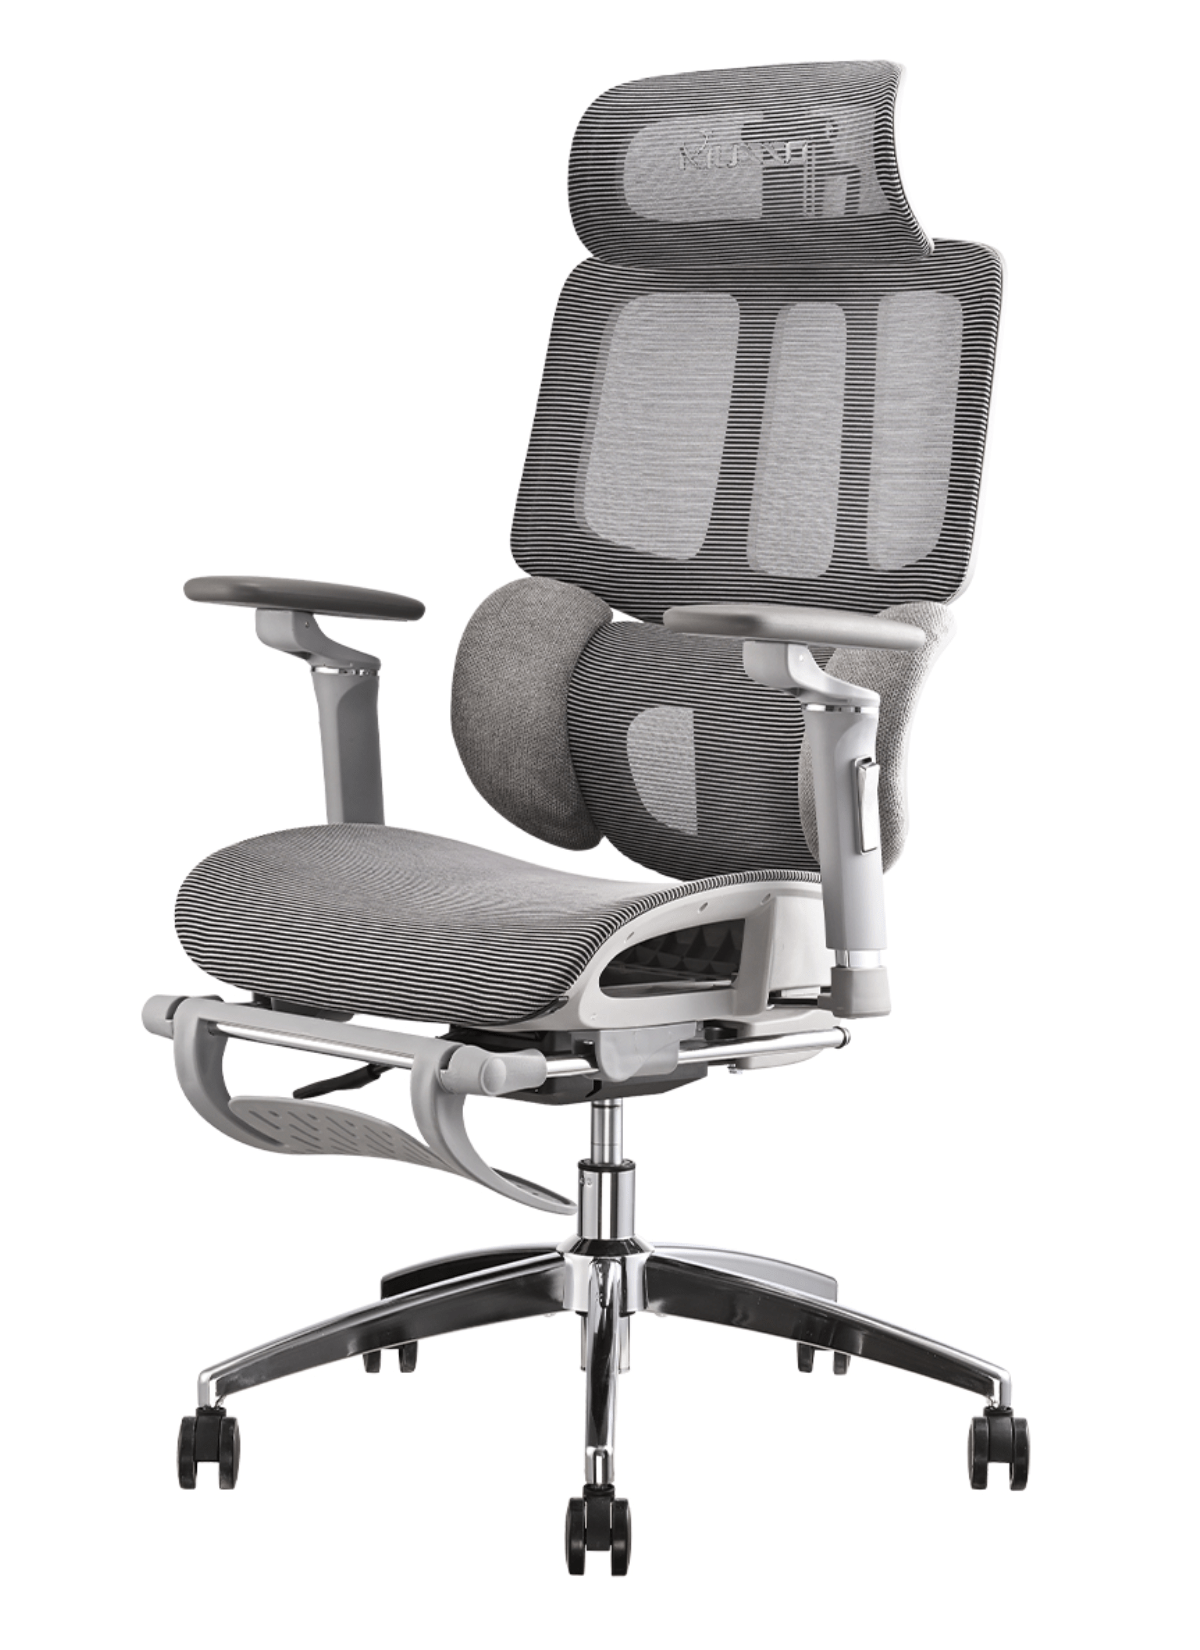 MUSSO H80 PRO  Ergo Chairs  Adjustable Headrest Ergonomic Mesh Office Chair  XL SIZE